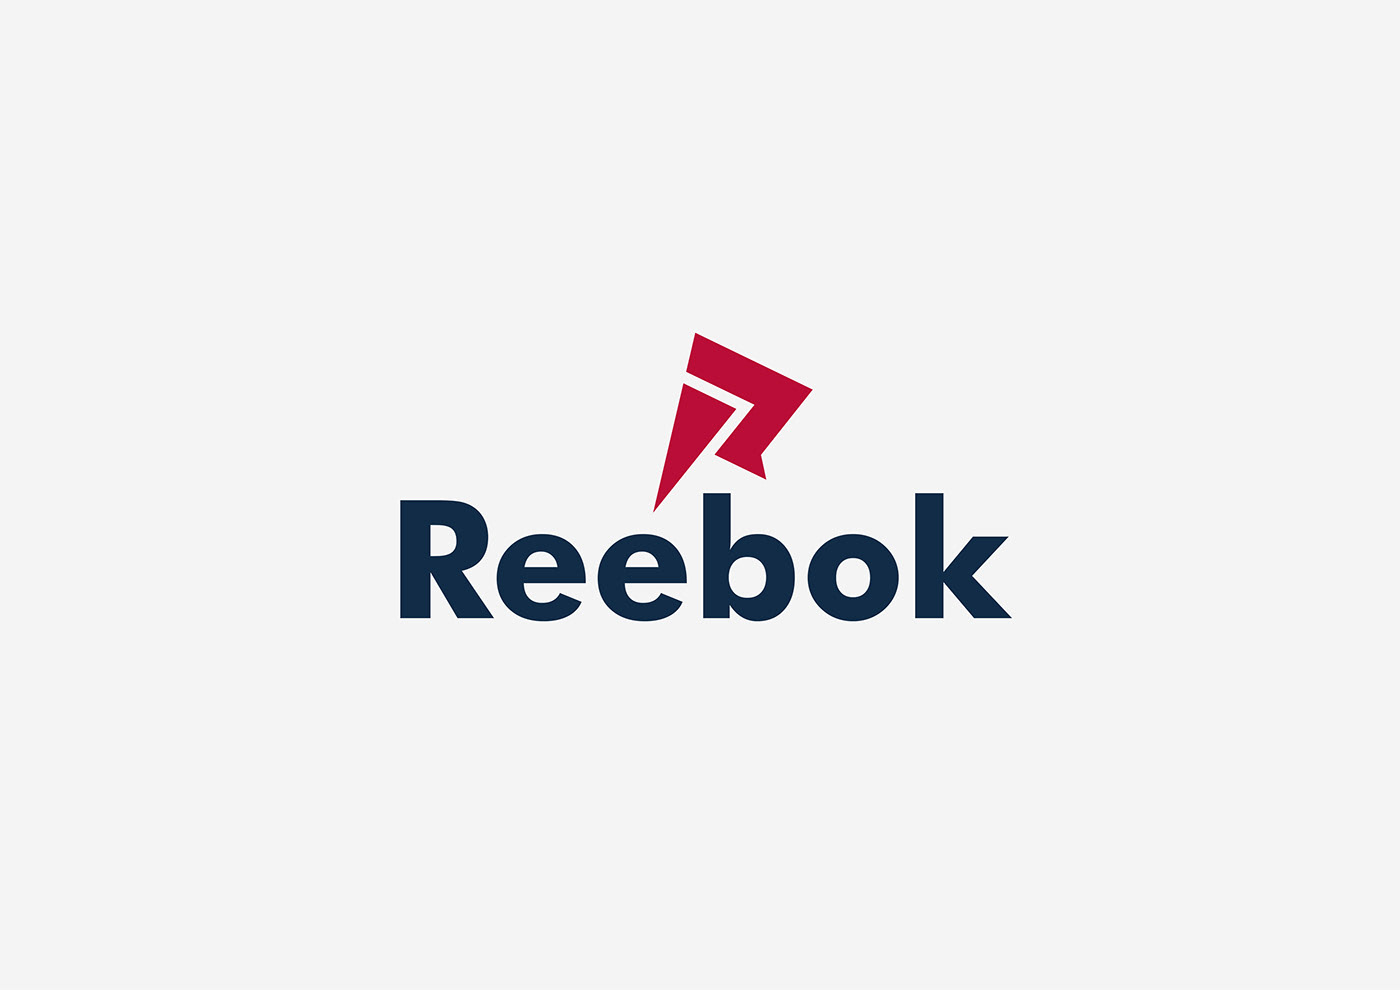 Reebok Logo Re-Design on Behance